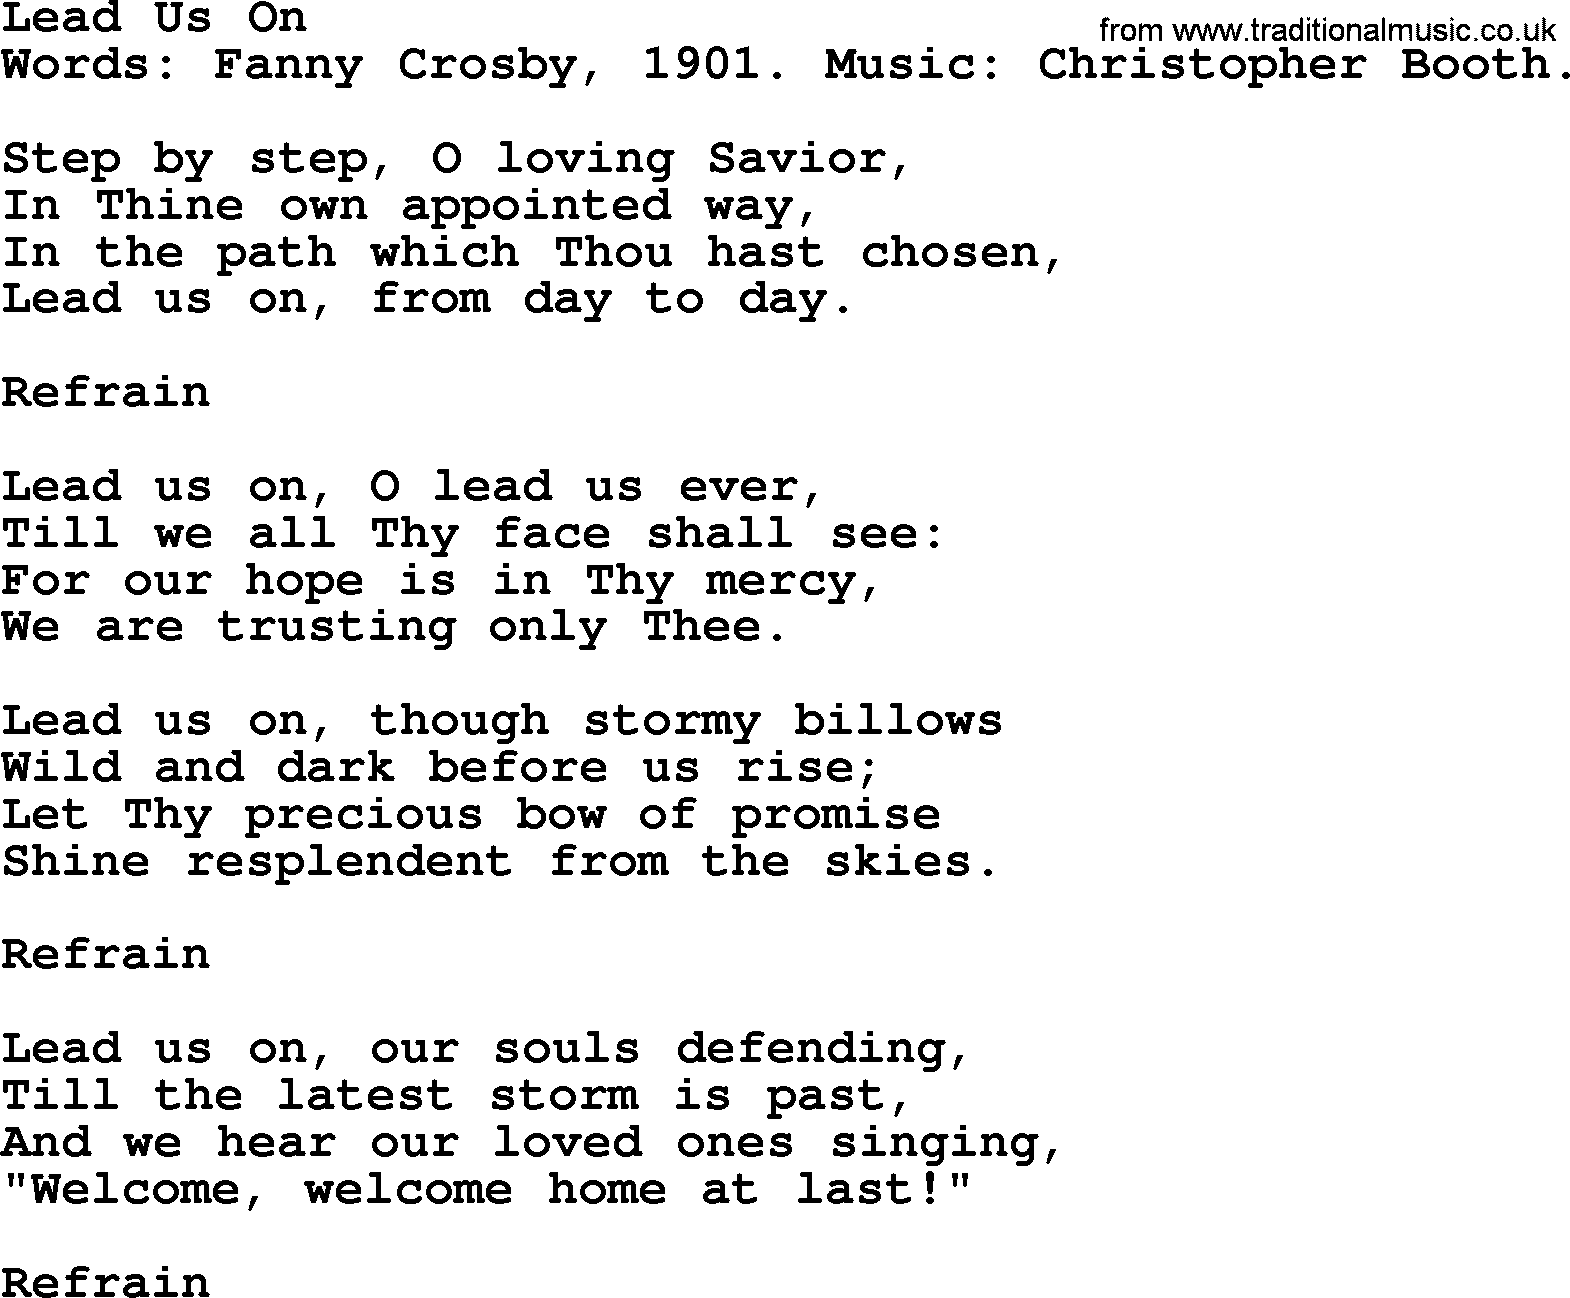 Fanny Crosby song: Lead Us On, lyrics